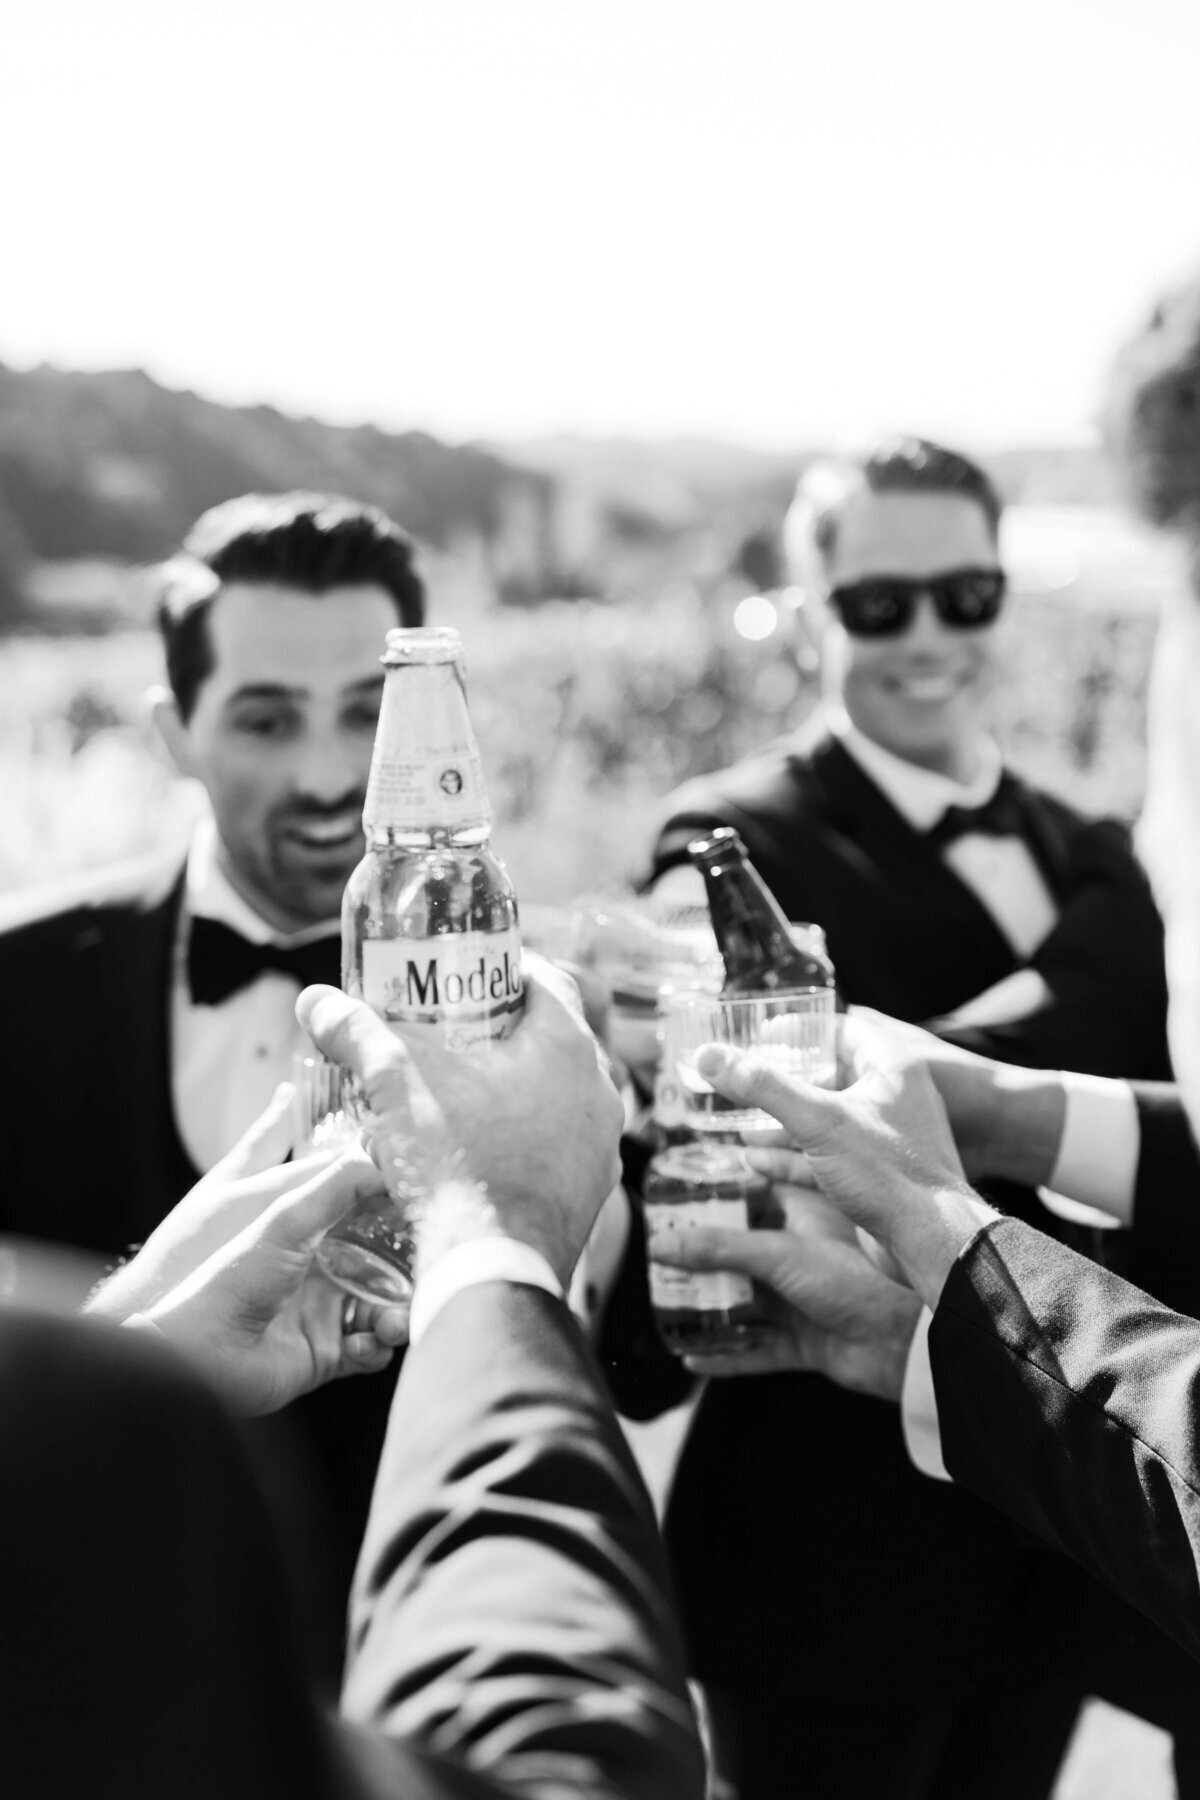 editorial style wedding photography groomsmen toasting